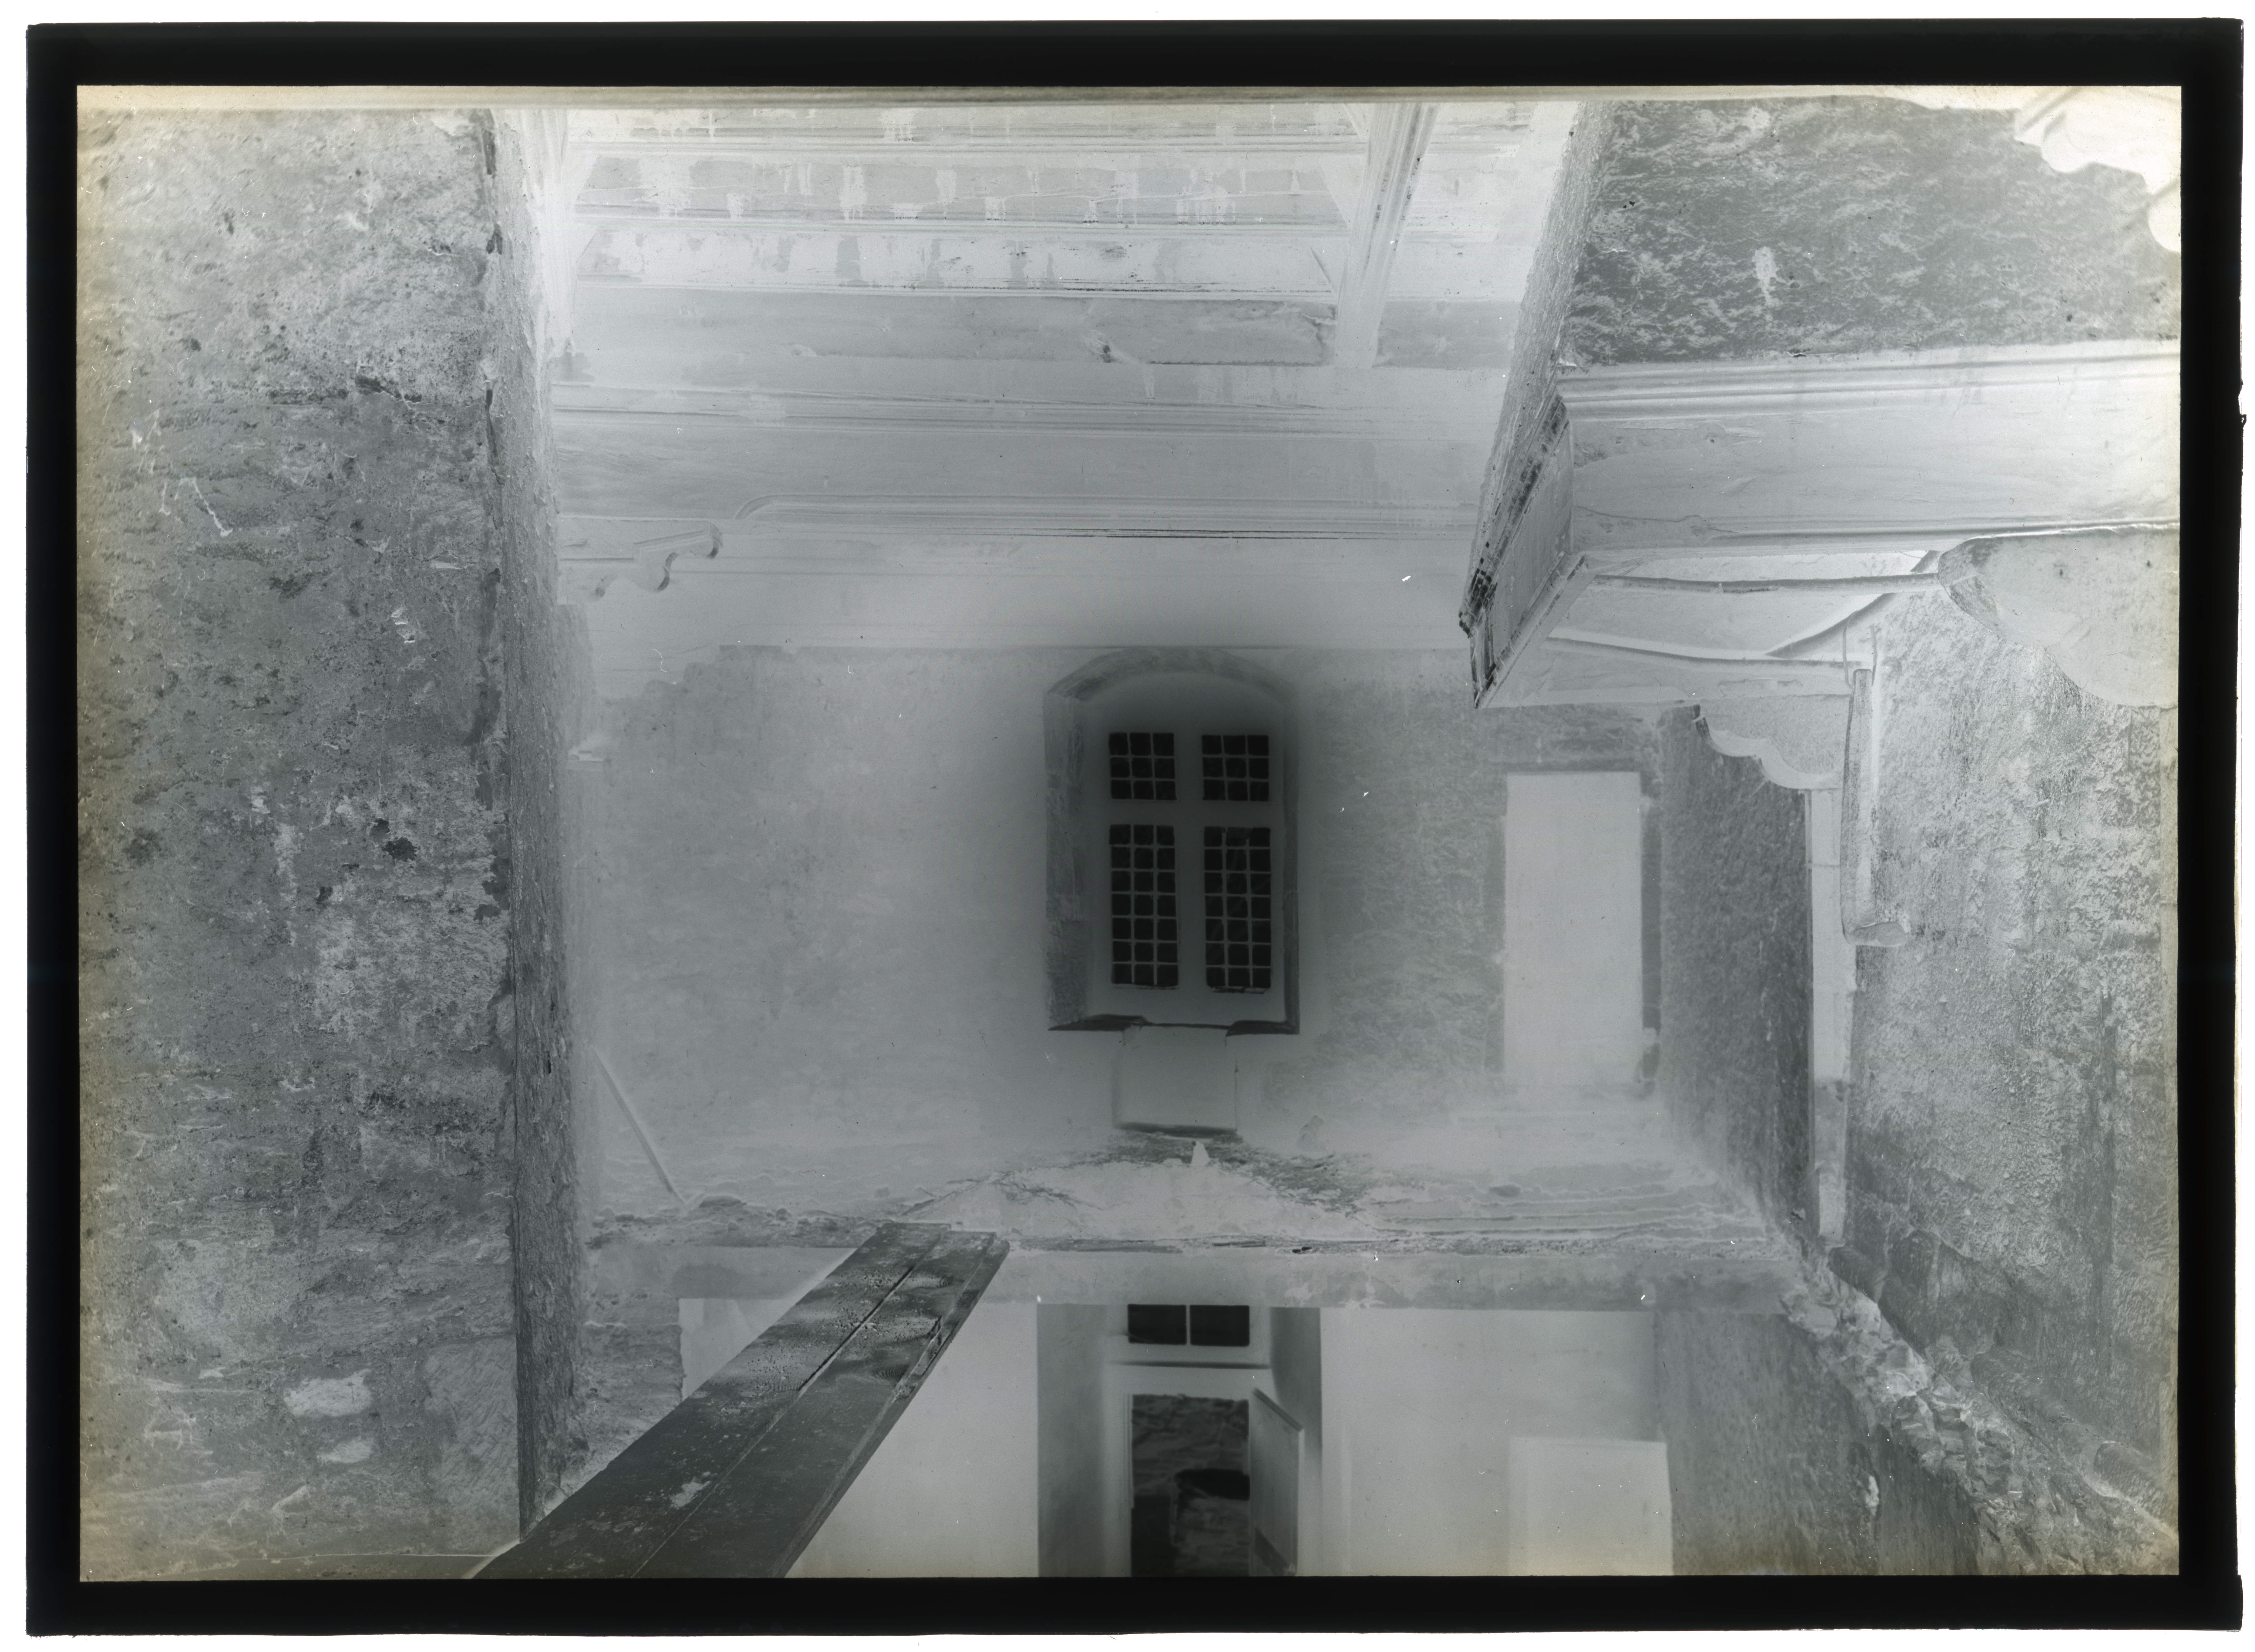 Fénis - Castello di Fénis - Restauri (negativo) di Pedrini, Augusto (XX)